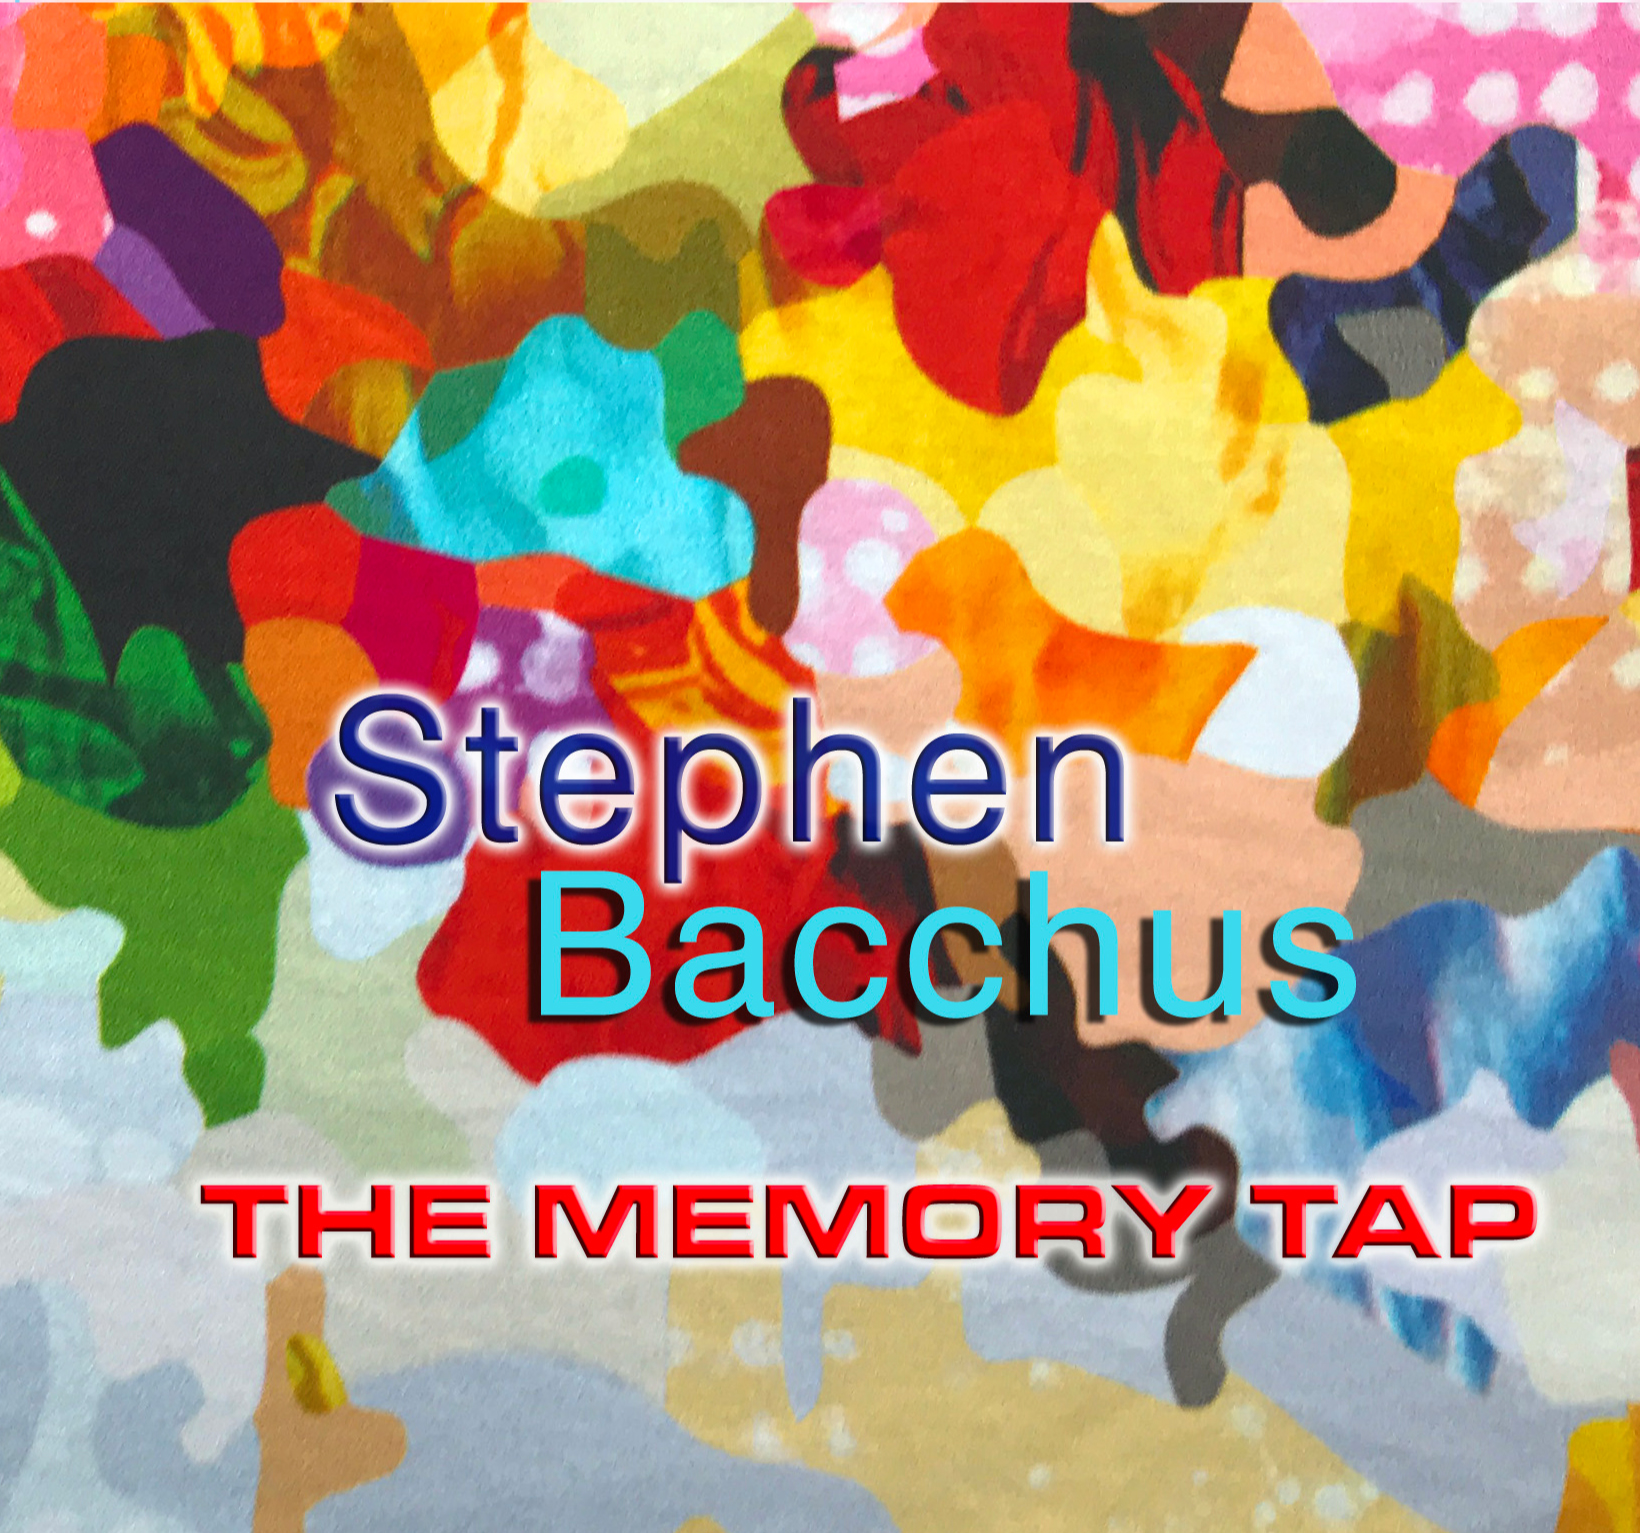 The Memory Tap album cover